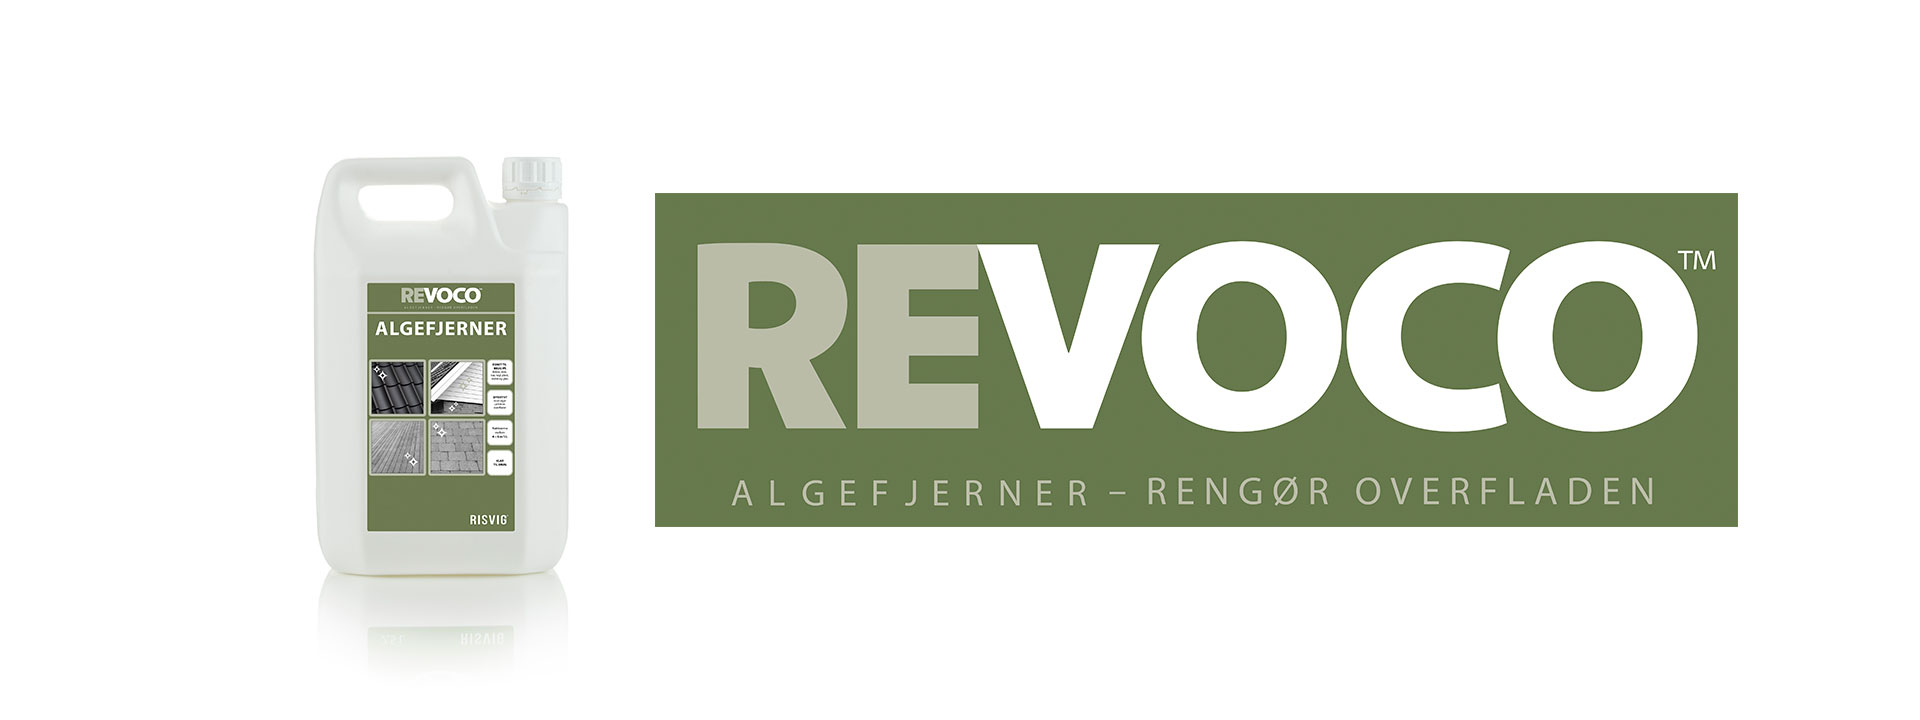 REVOCO Algefjerner fra RISVIG